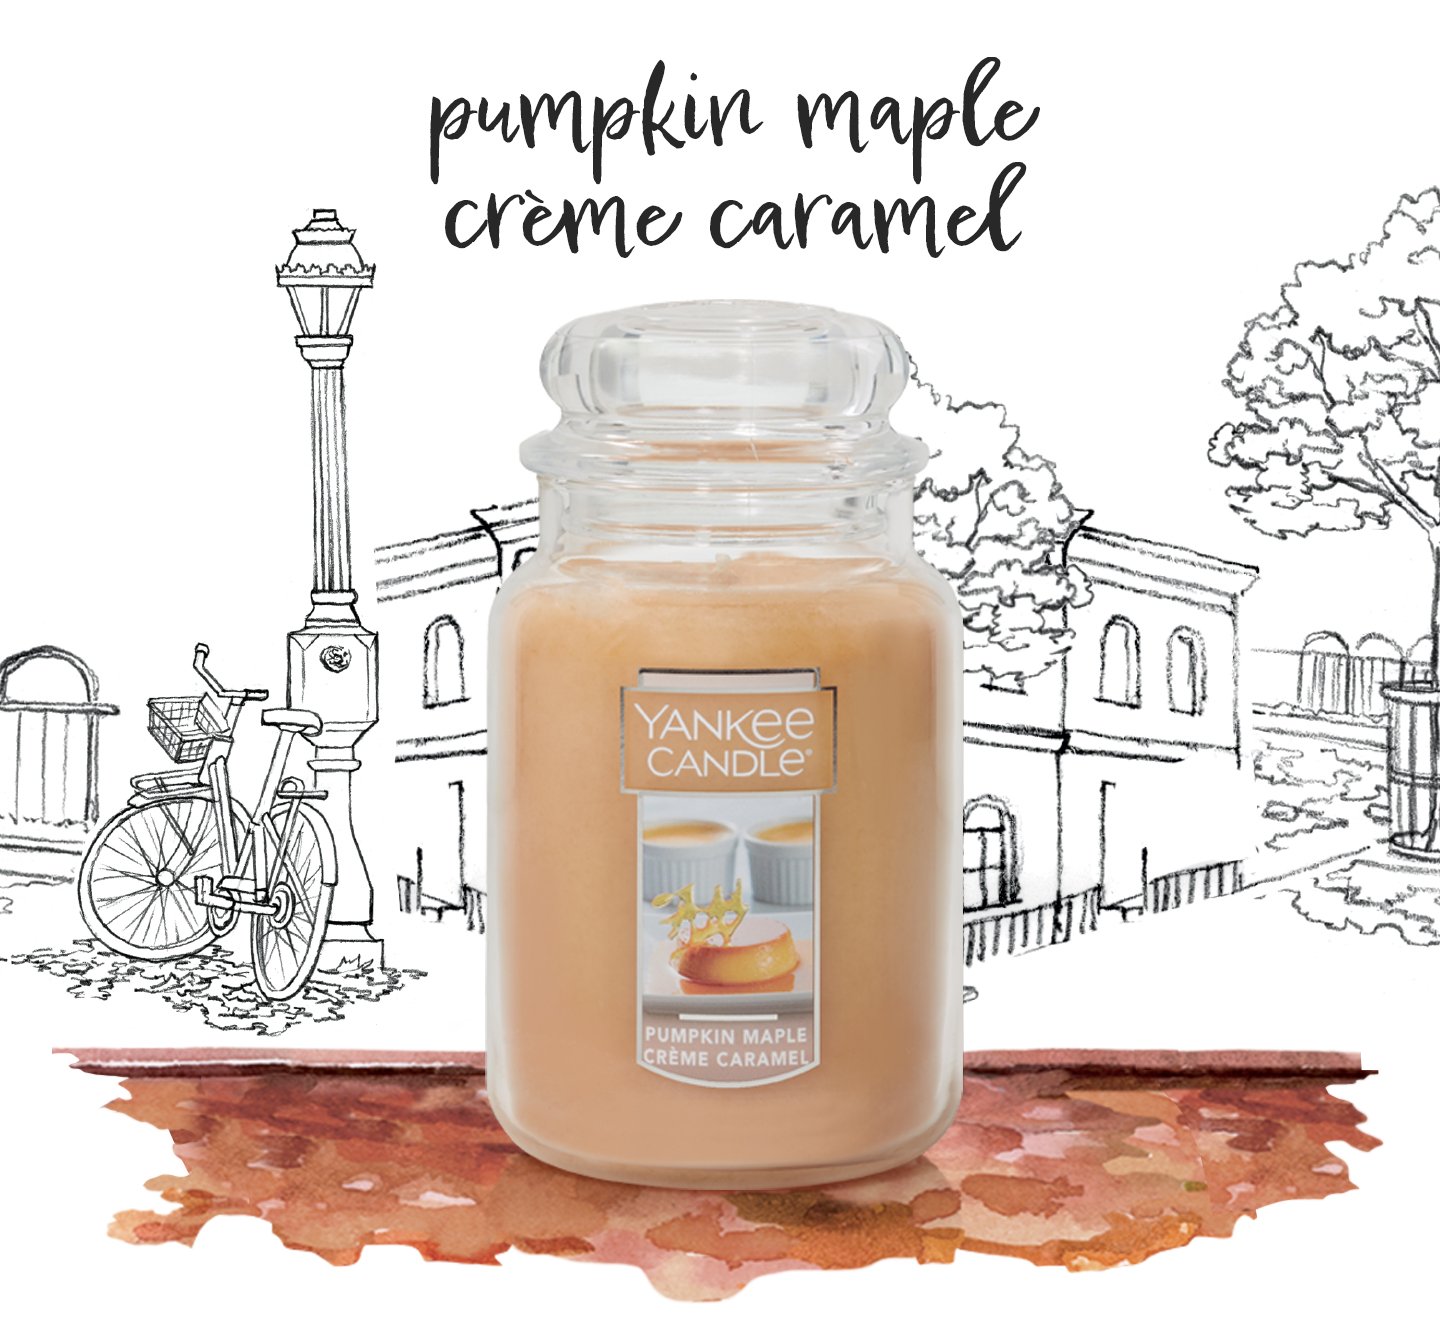 pumpkin maple creme caramel signature large tumbler candle in illustrated city park scene